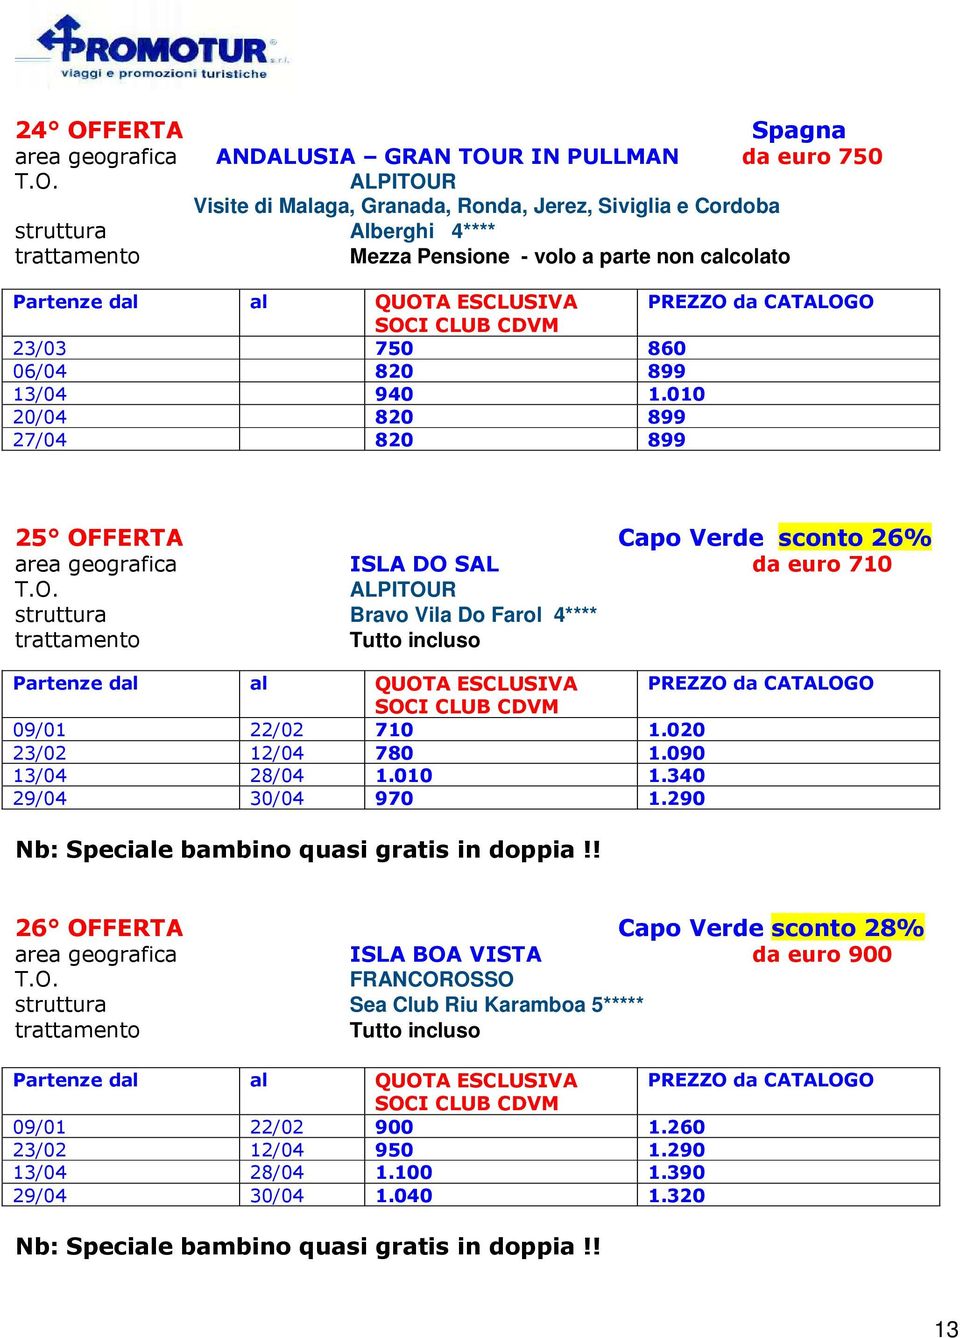 010 899 27/04 820 899 25 OFFERTA Capo Verde sconto 26% area geografica ISLA DO SAL da euro 710 Bravo Vila Do Farol 4**** 09/01 22/02 710 1.020 23/02 12/04 780 1.